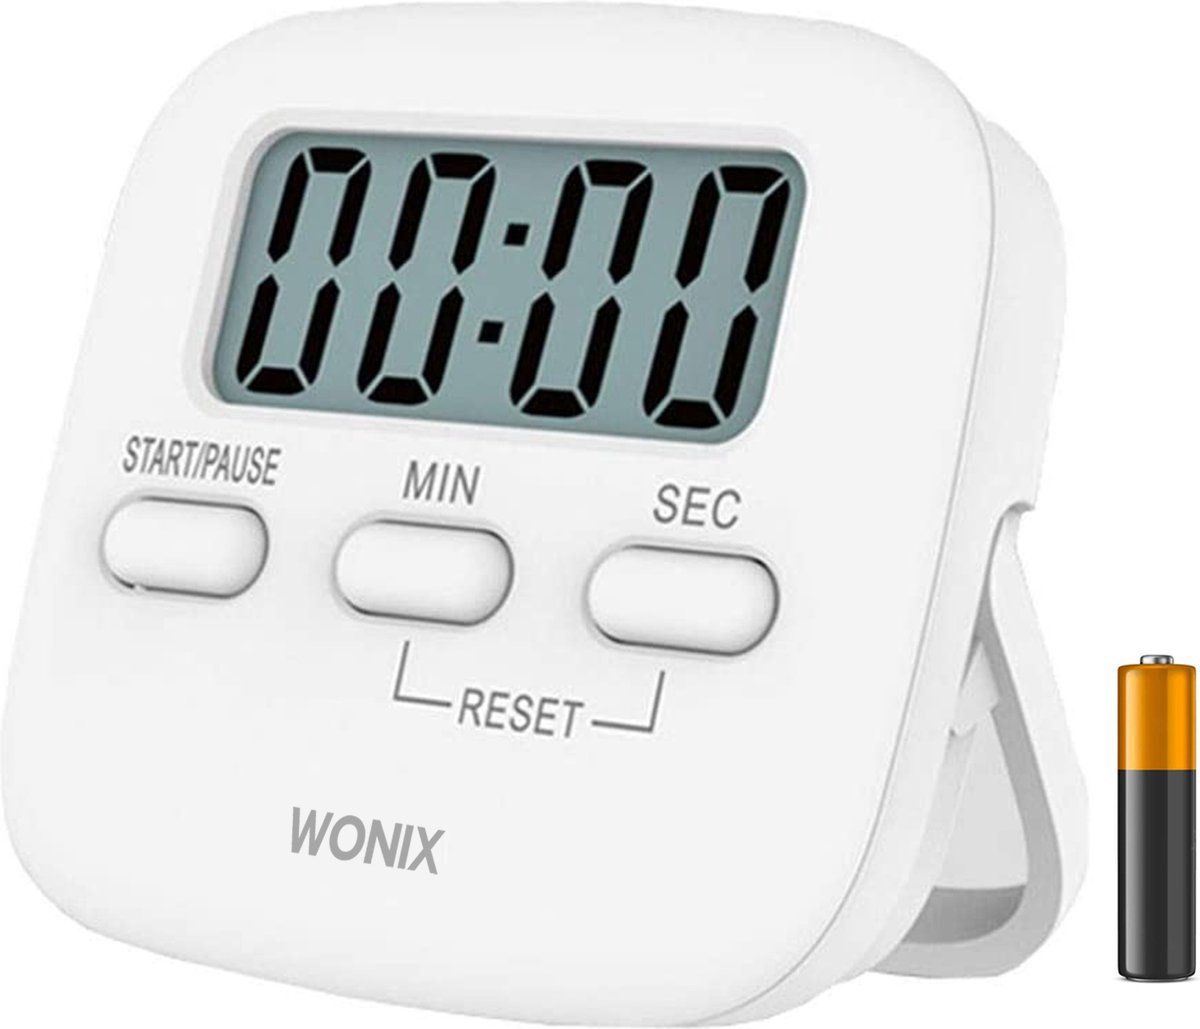 Wonix® kookwekker digitaal - Digitale timer - Magneet - Eierwekker - Wit - Wonix®